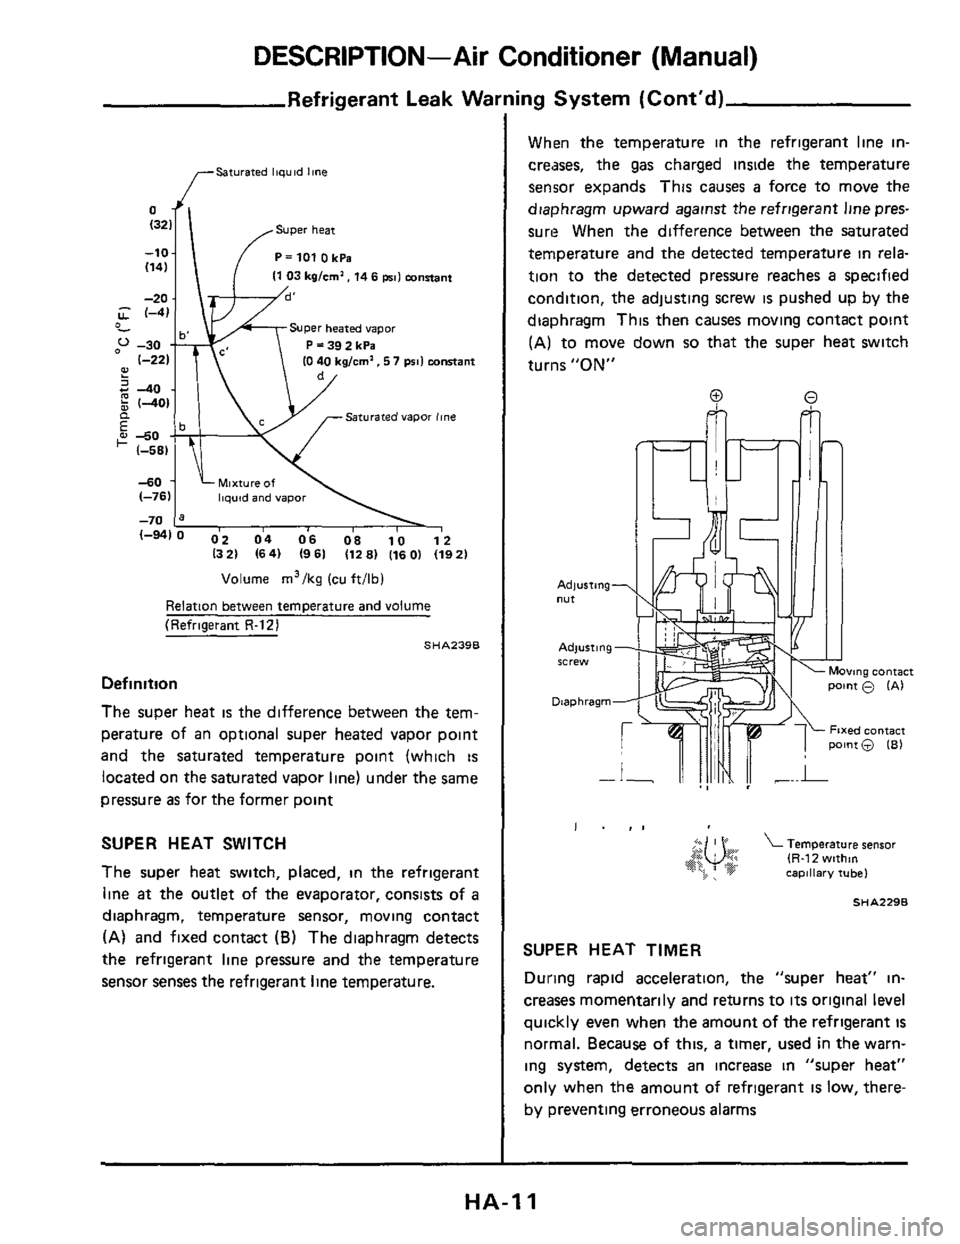 NISSAN 300ZX 1984 Z31 Heather And Air Conditioner User Guide DESCRIPTION-Air Conditioner (Manual) 
Refrigerant  Leak Wai 
,---Saturated liquid line 
Super  heat 
-10  P=1010kPa 
I1 03 kg/cm2, 14 6 si1 mnsant (141 
U 4- Super heated vapor 
P = 39 2 kPa 10 40 kgl